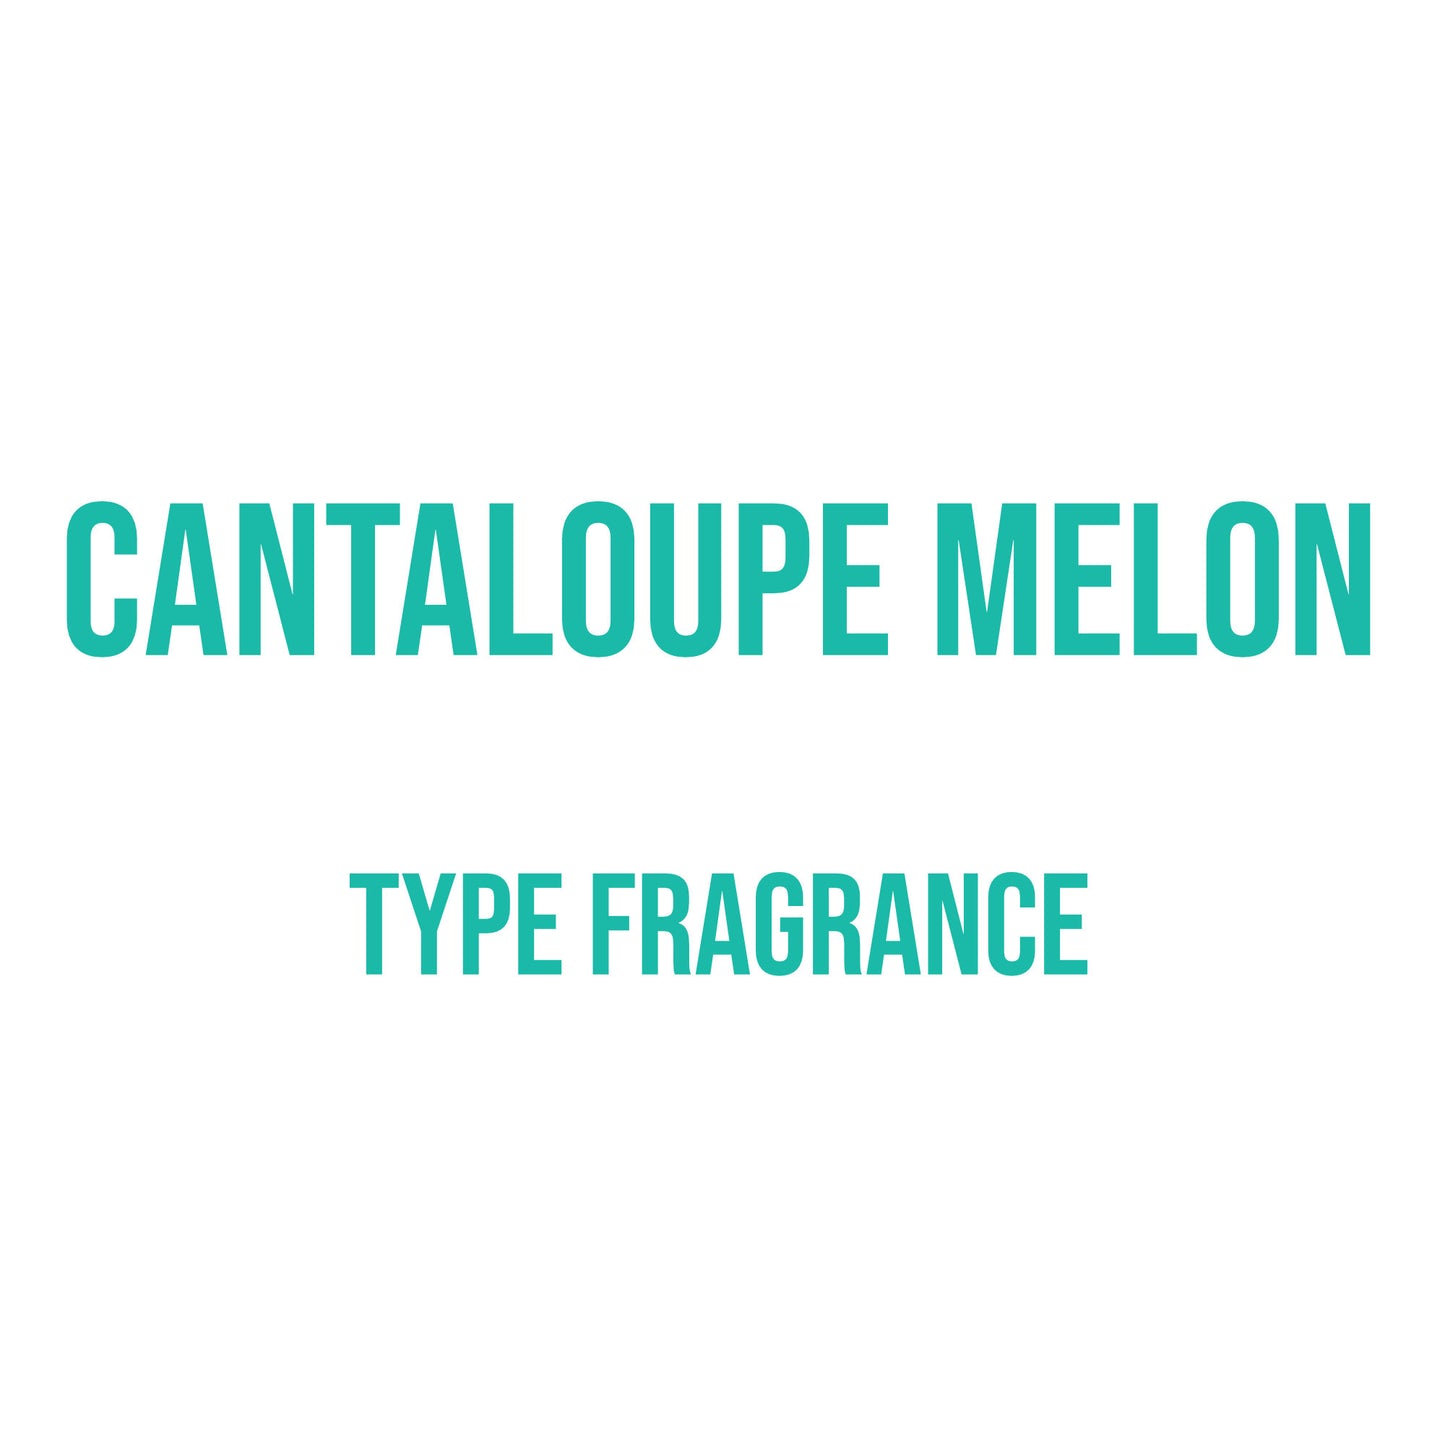 Cantaloupe Melon Type Fragrance